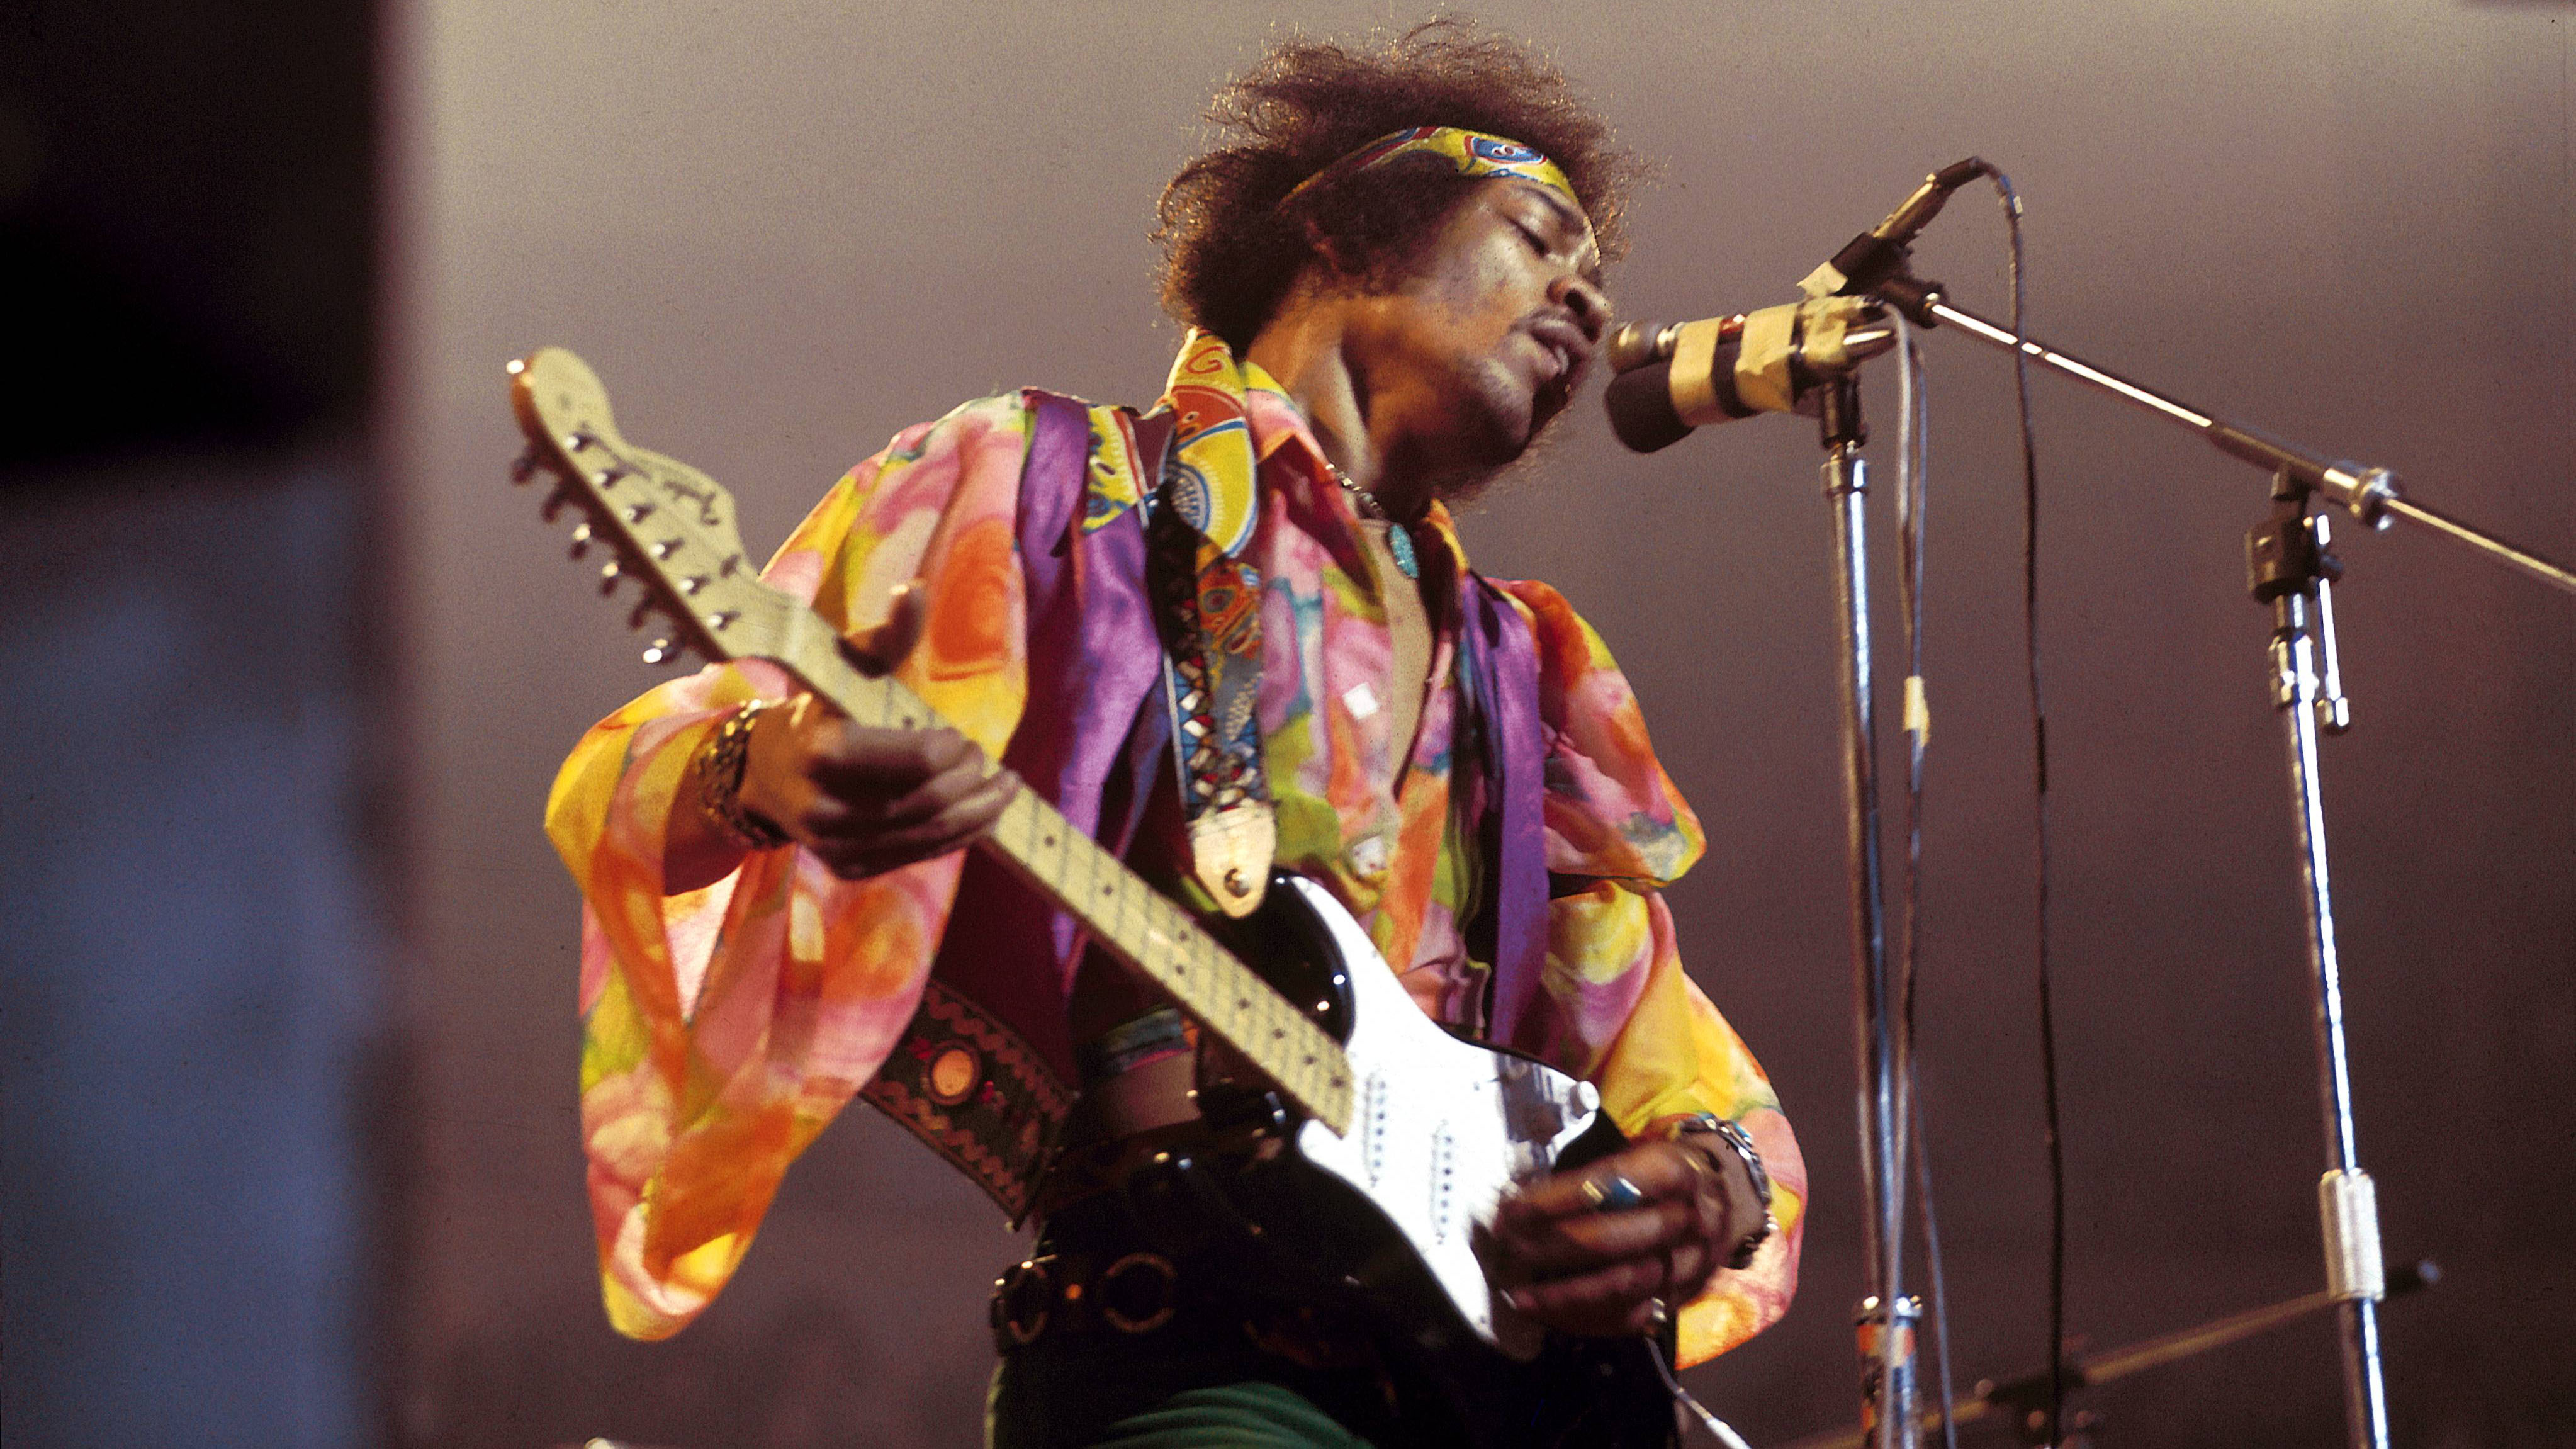 Jimi Hendrix's 20 greatest guitar moments, ranked